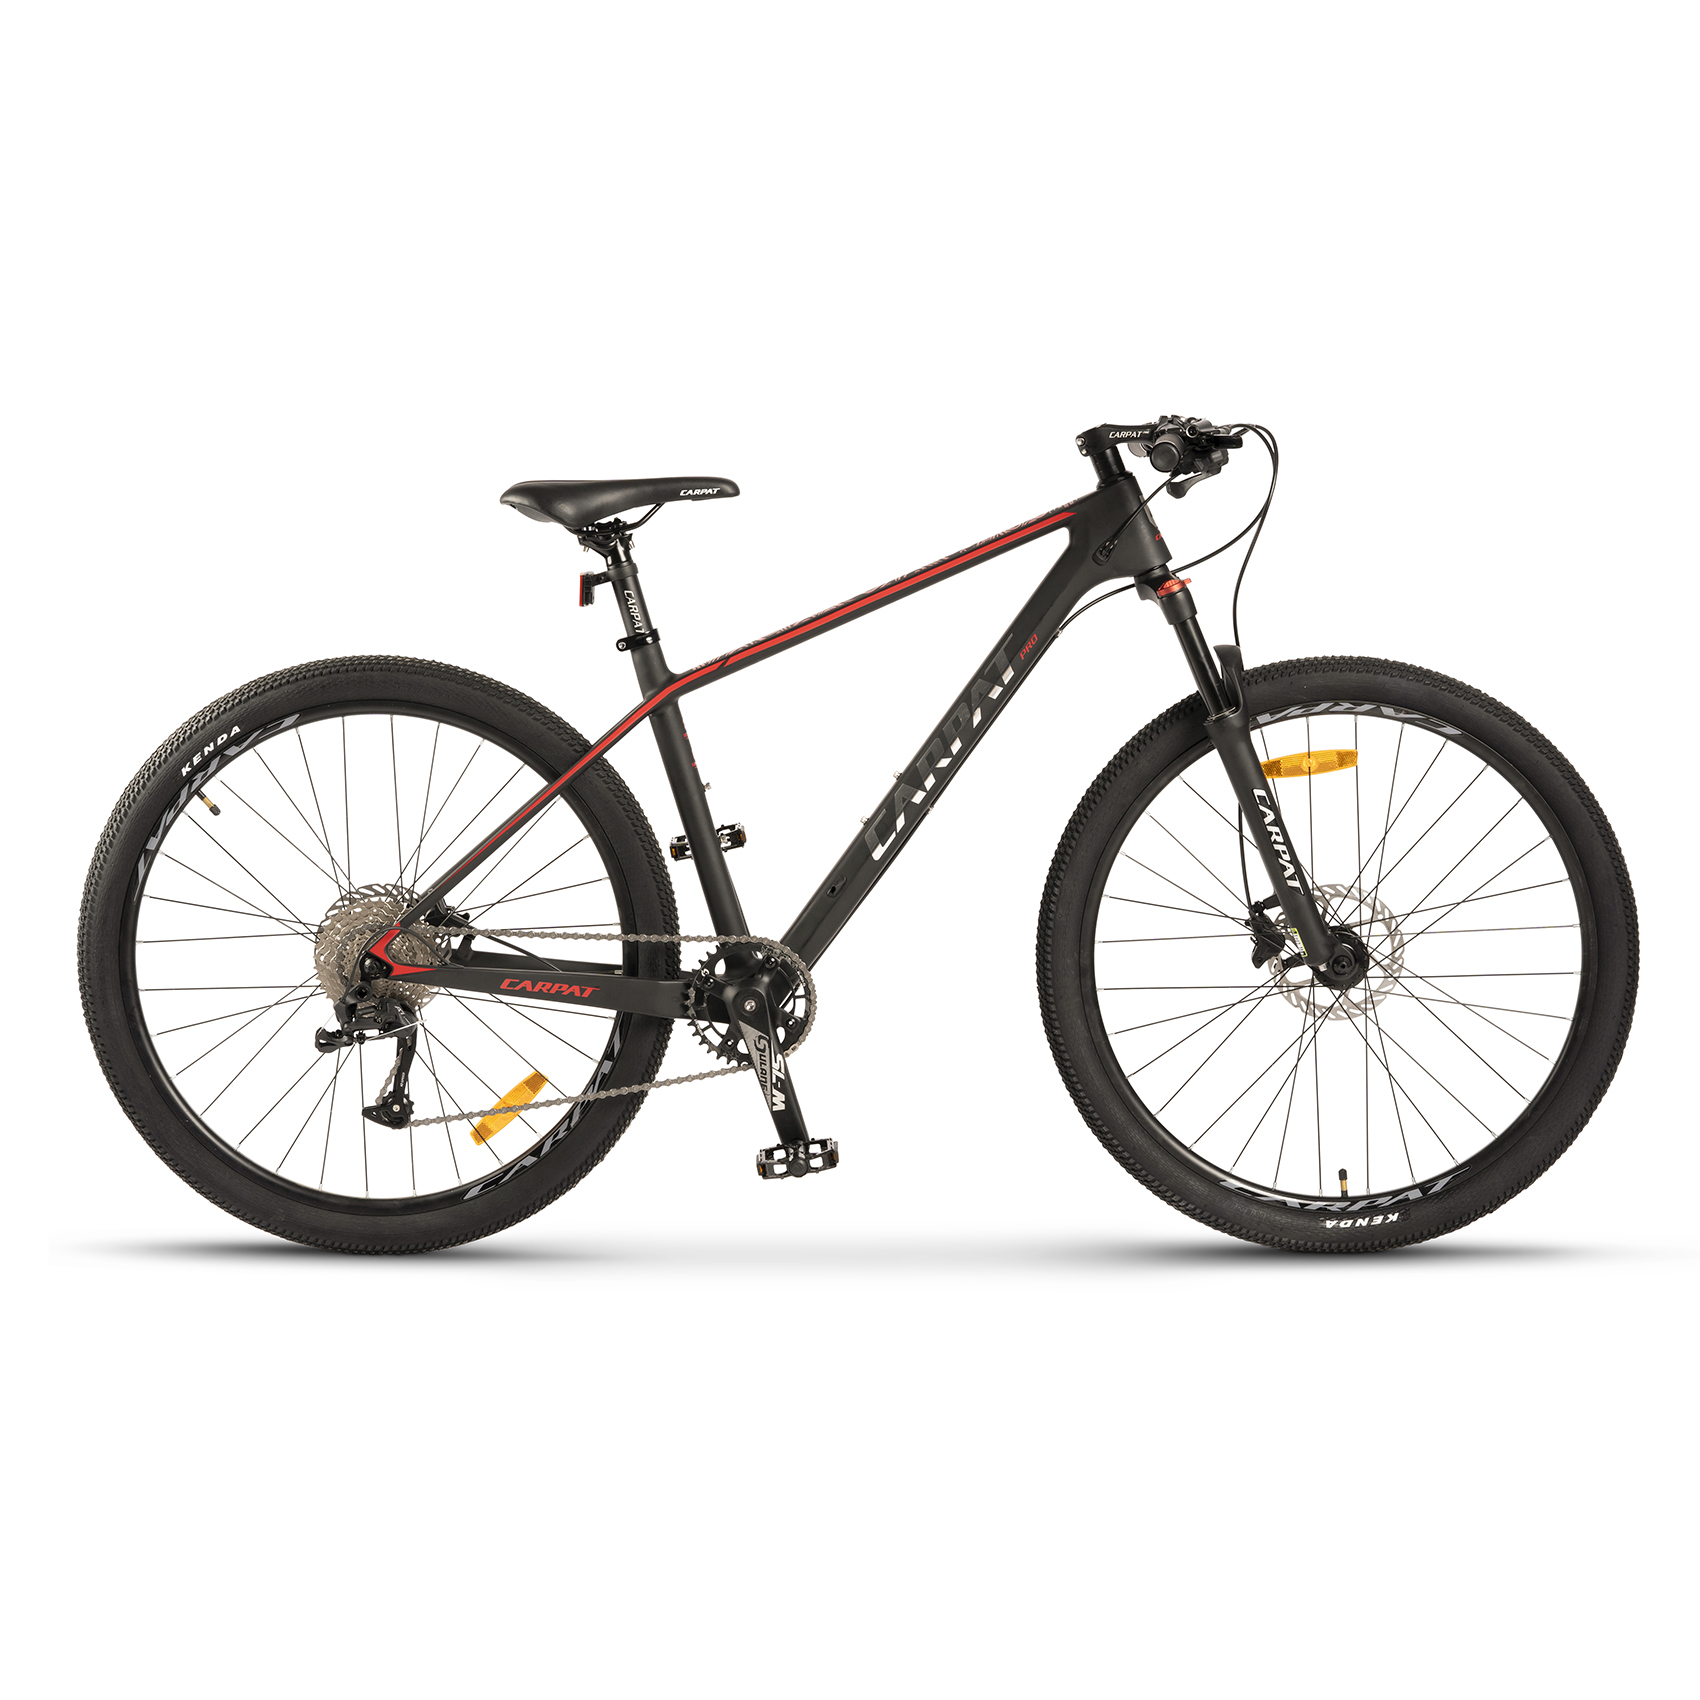 PROMO BICICLETE - Bicicleta MTB-HT Carpat PRO CARBON C275C 27.5", Gri/Rosu, https:carpatsport.ro